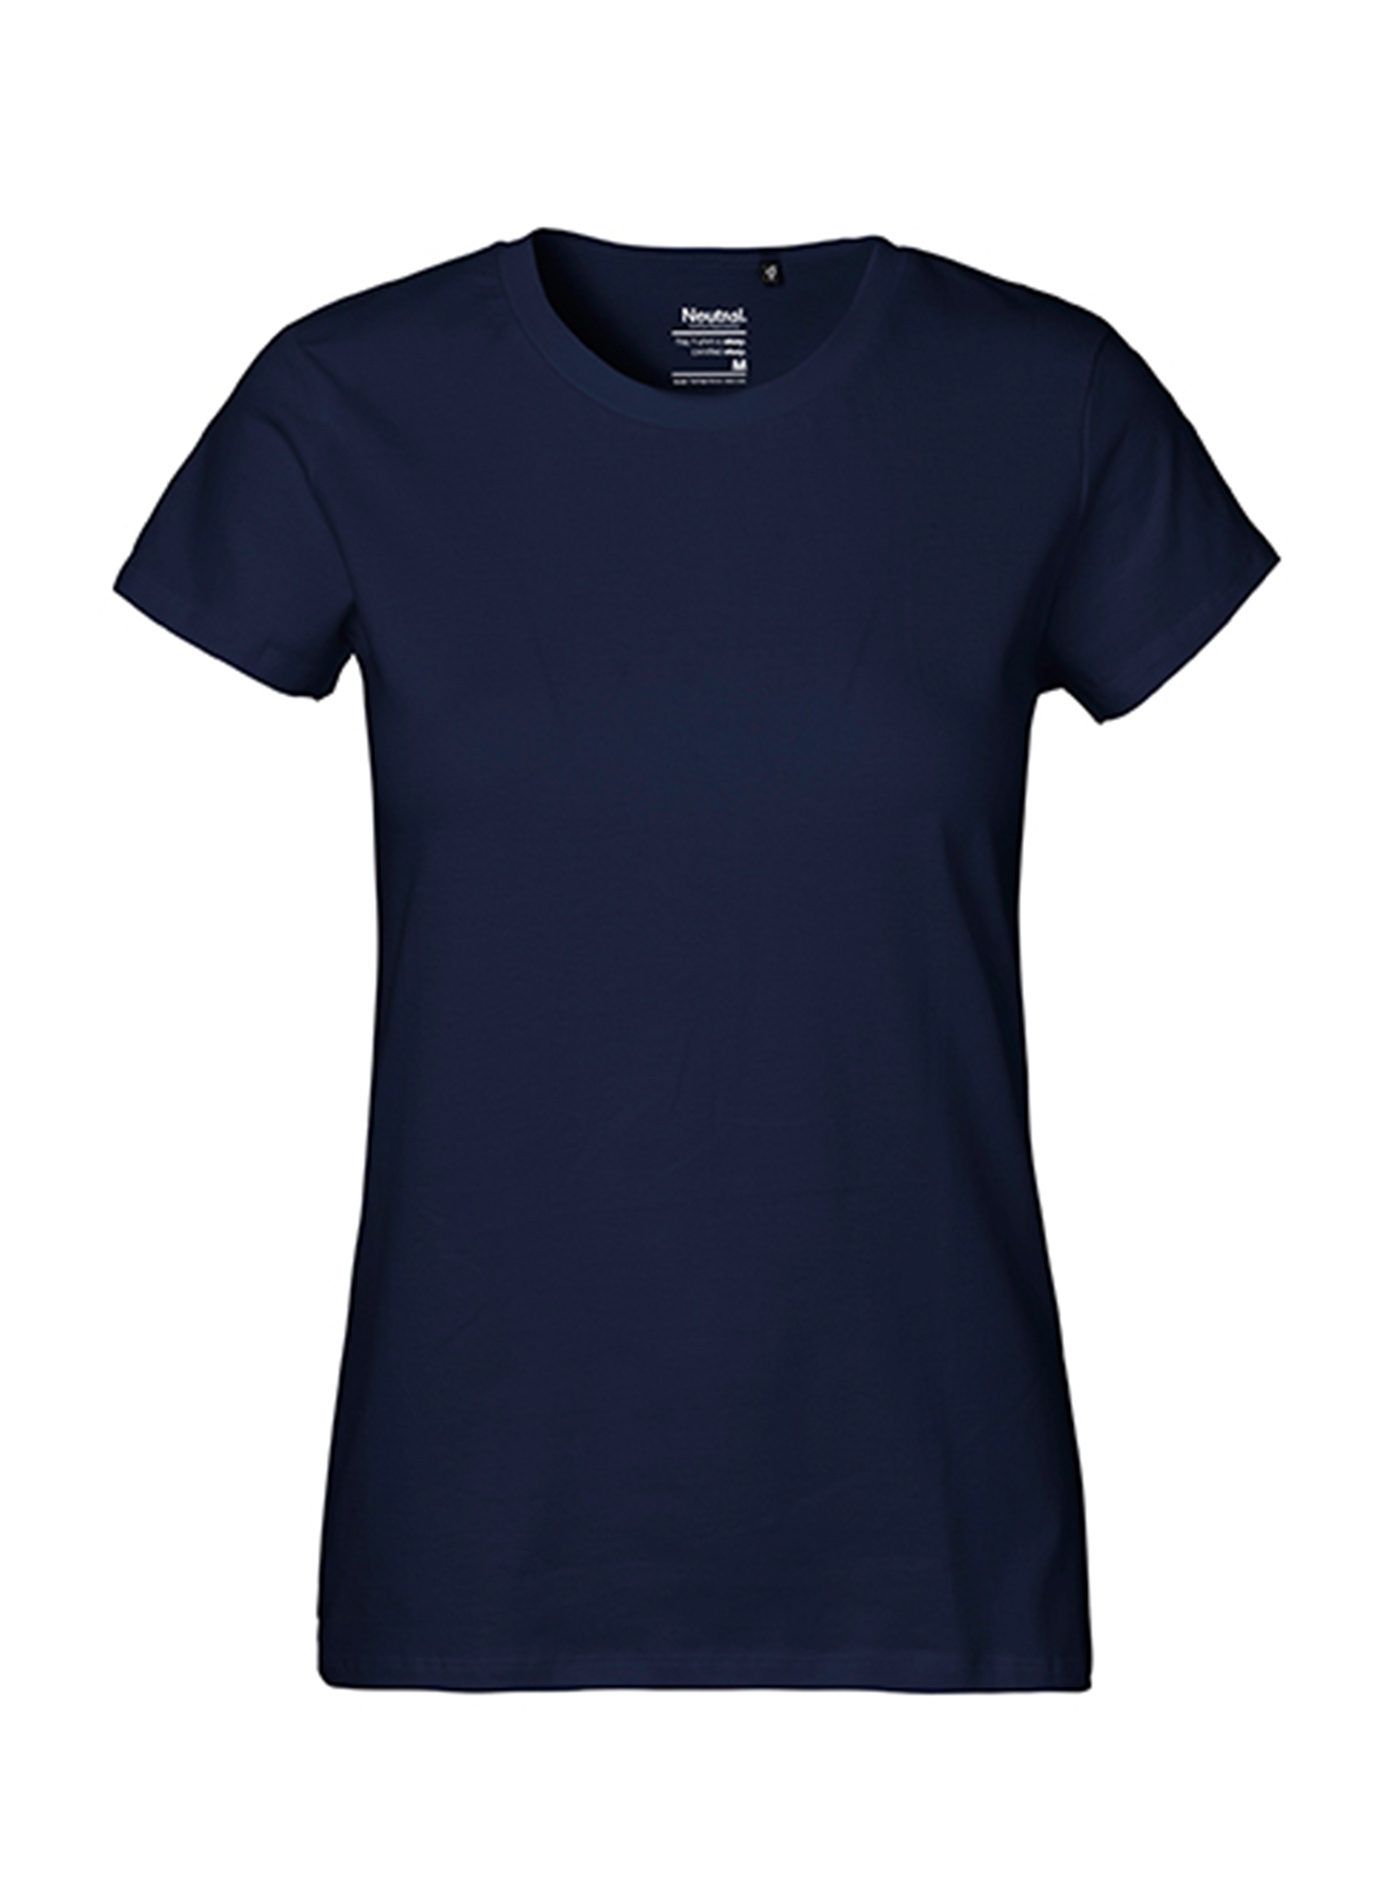 Dámské tričko Neutral Classic - Námořní modrá XL